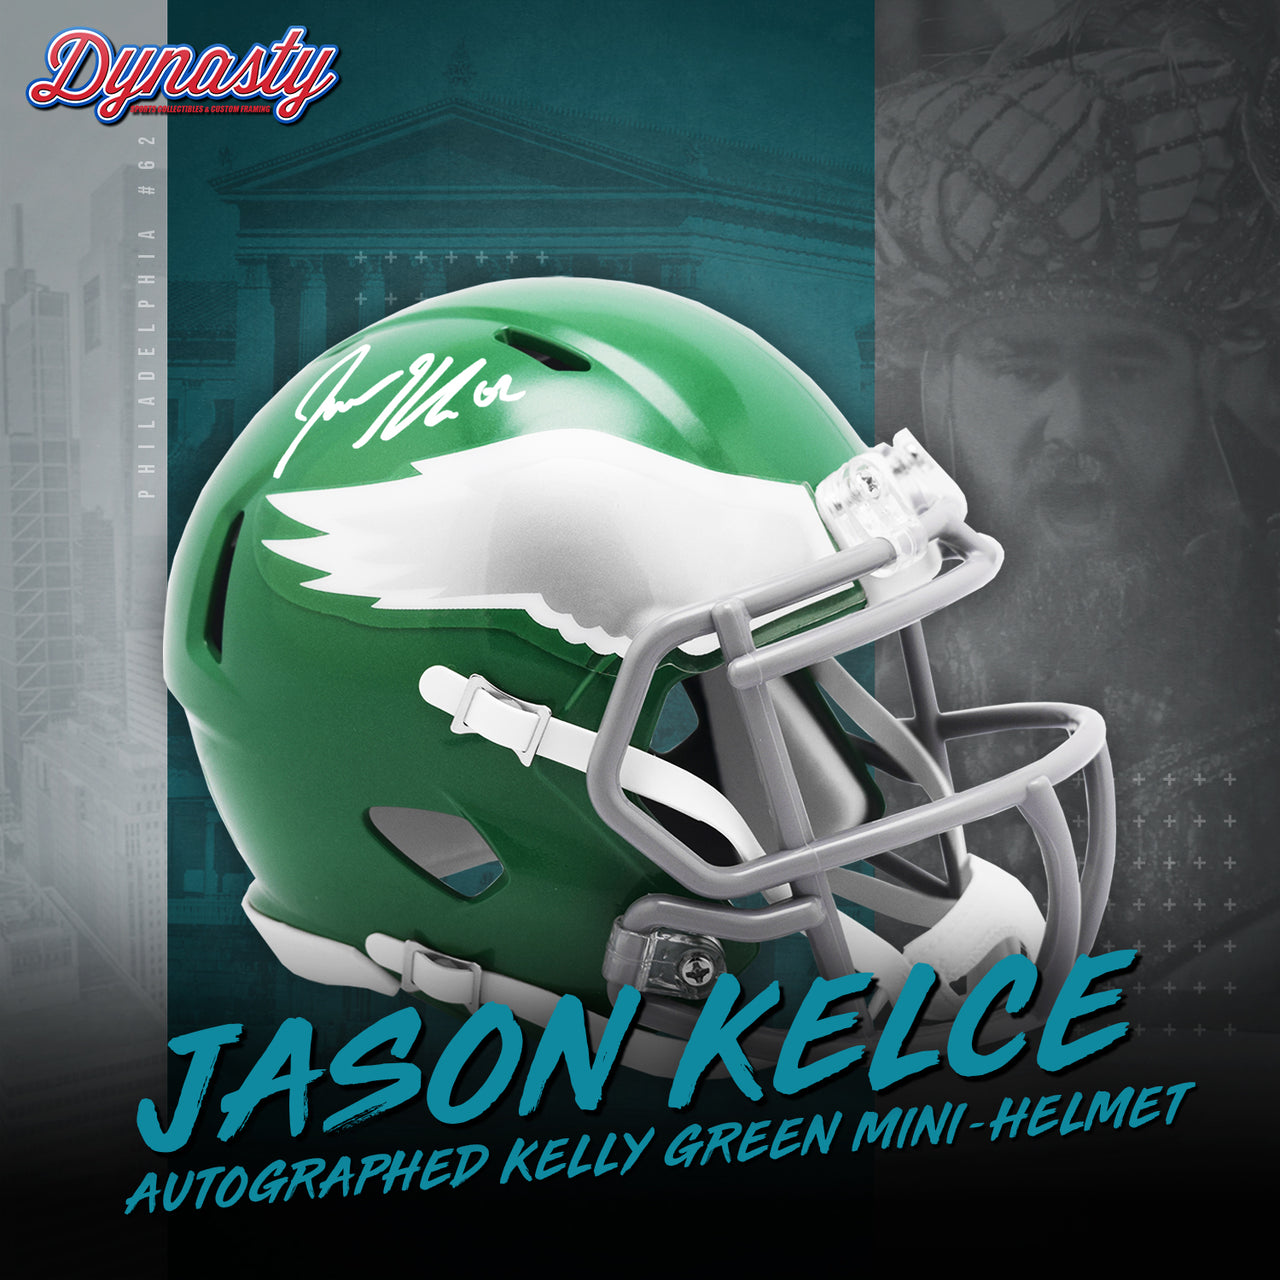 Jason Kelce Autograph Eagles Kelly Green Mini-Helmet | Retirement Pre-Sale Opportunity